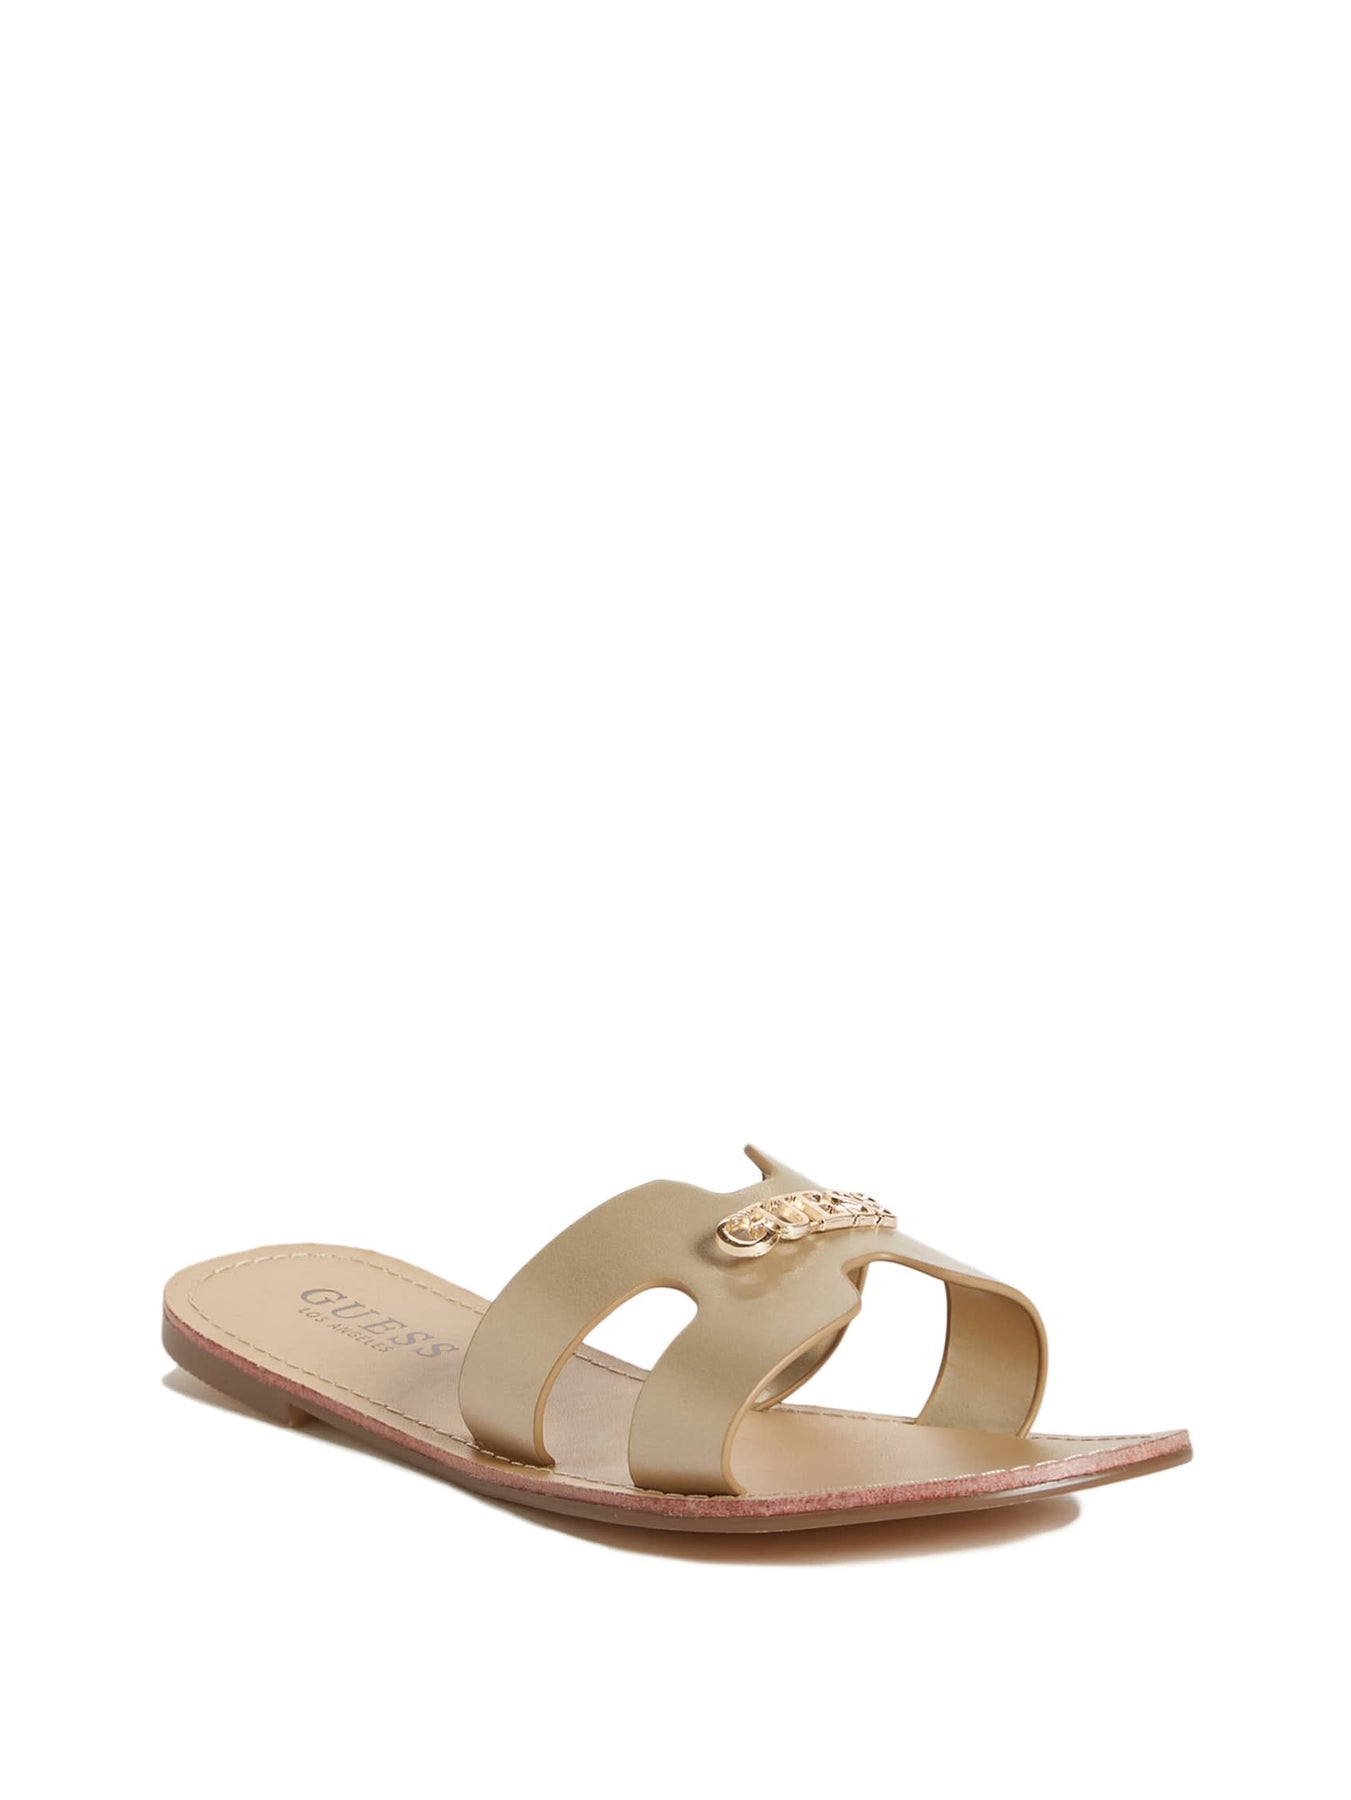 Guess Factory Isabell Slide Sandals | Shop Premium Outlets